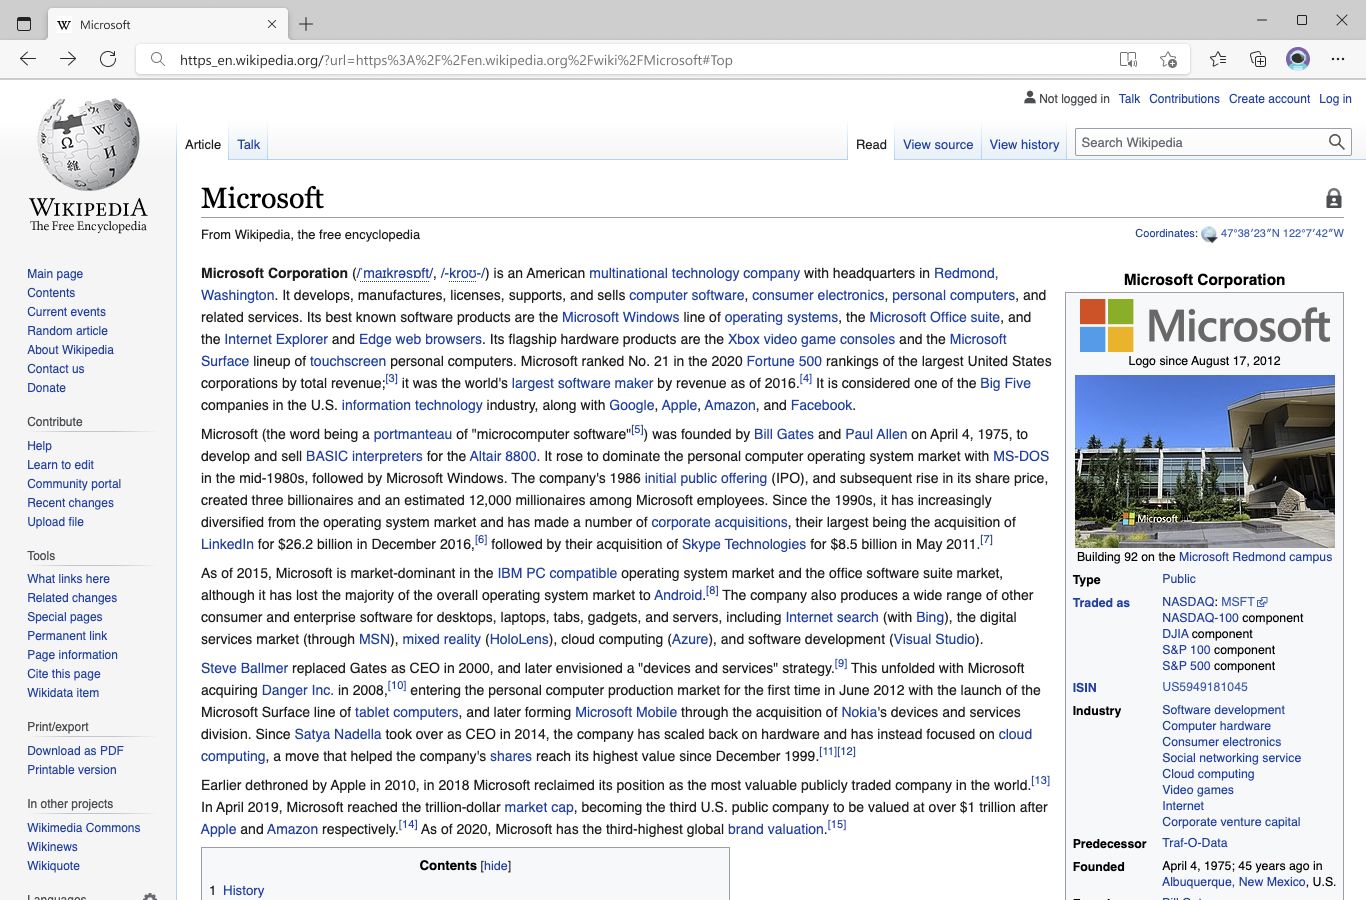 Improvements to history in Microsoft Edge - Page 3 - Microsoft Community Hub